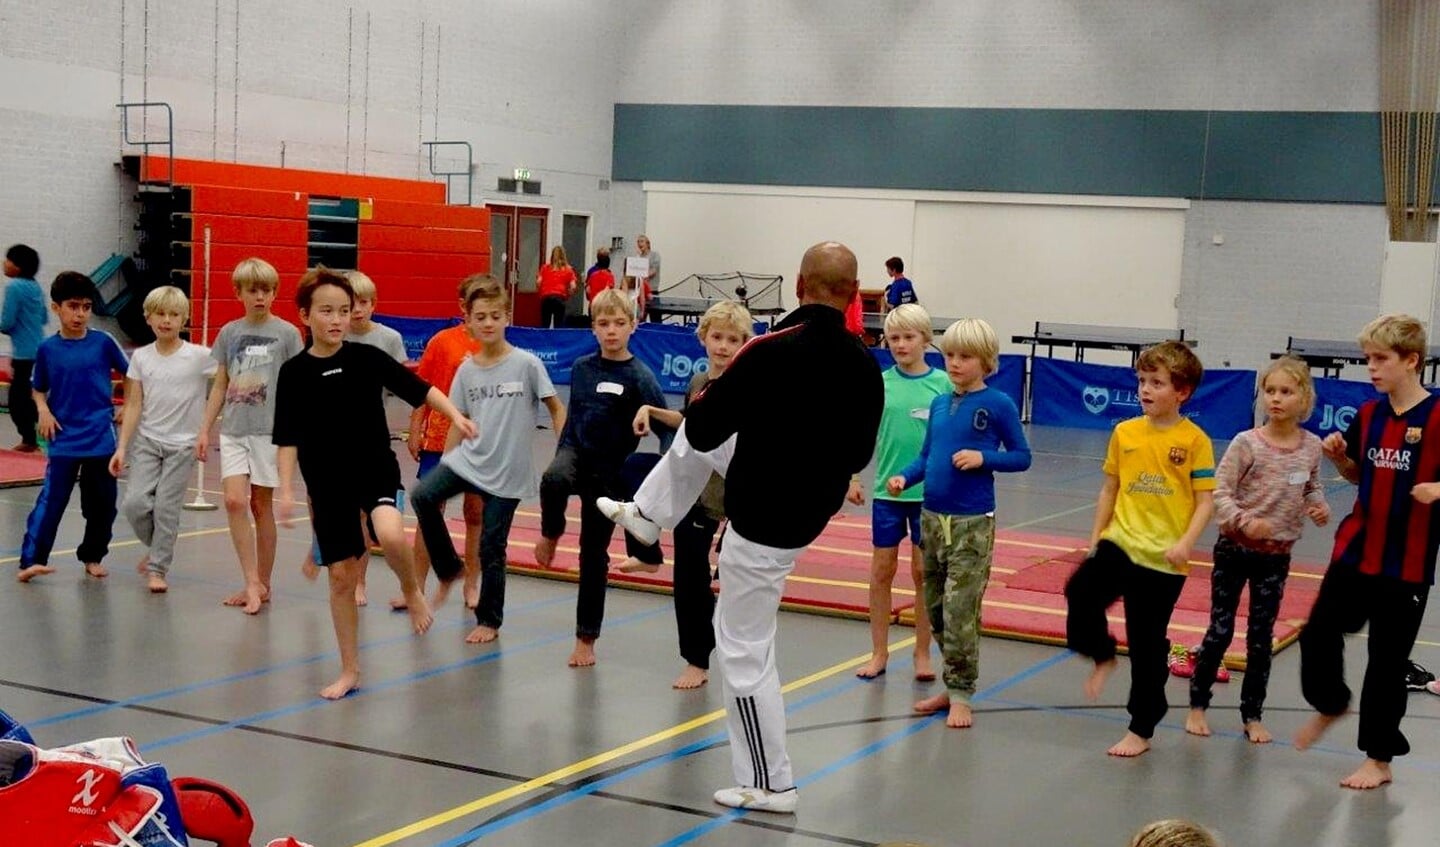 Taekwondotraining in sporthal Essesteijn (foto: Ap de Heus).